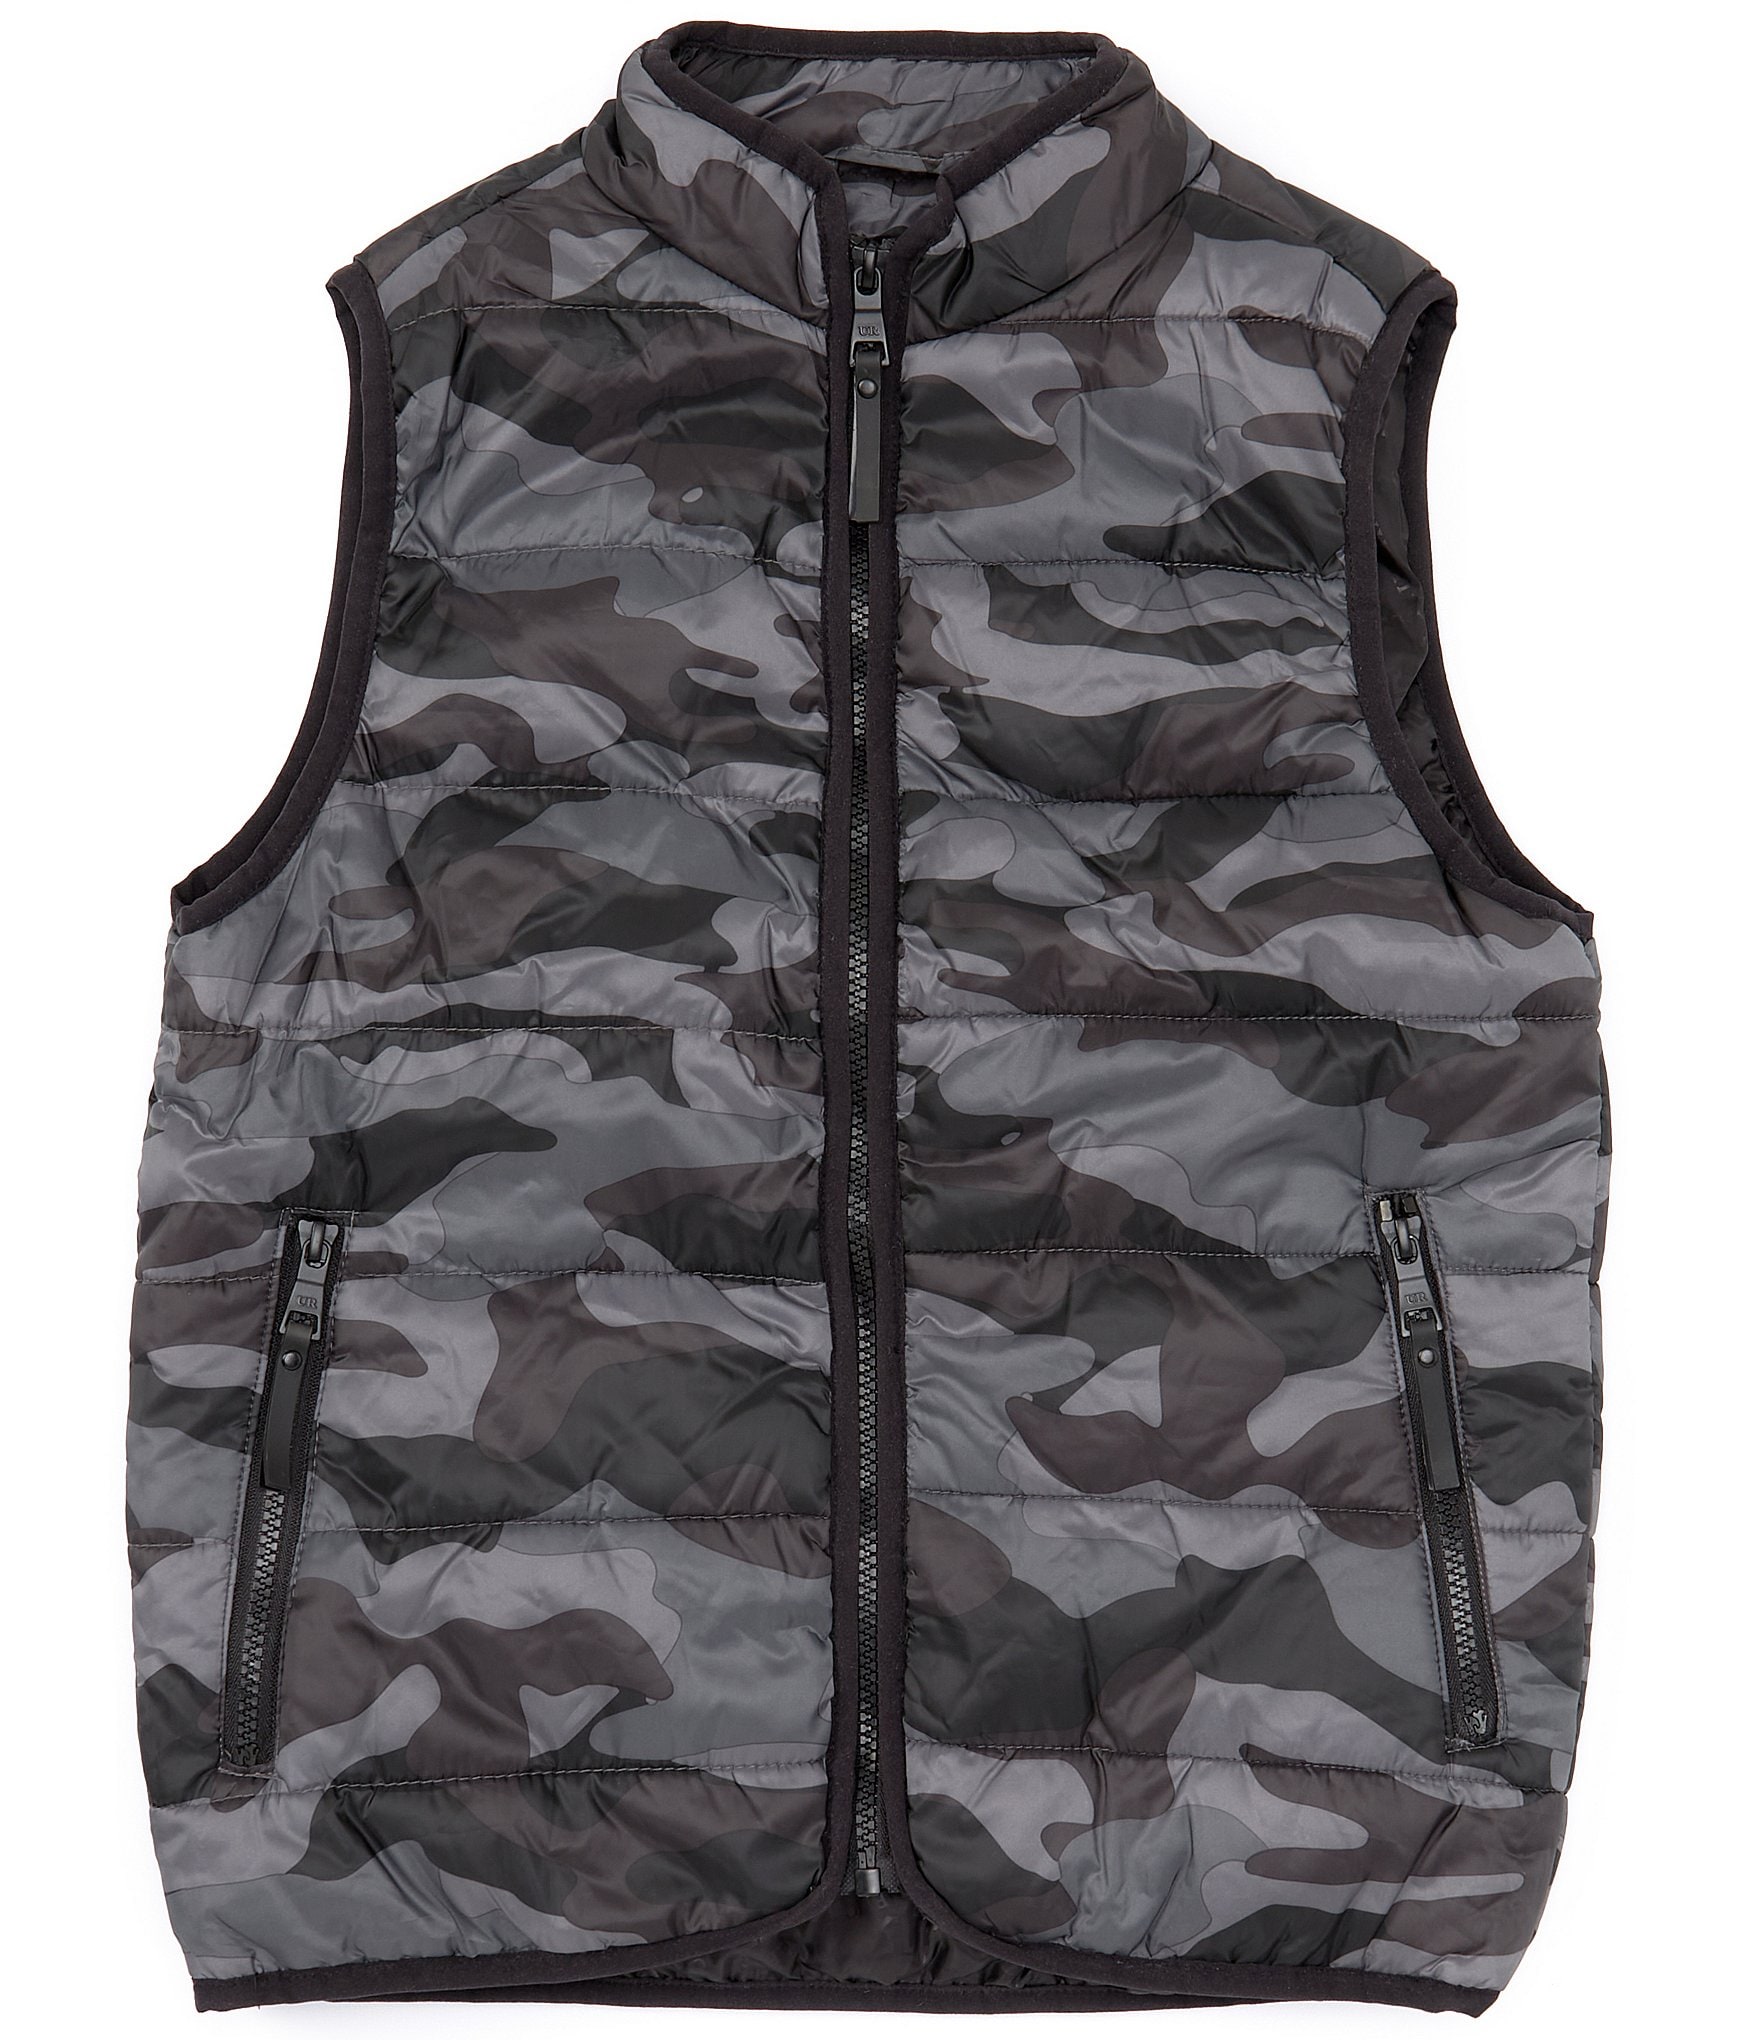 Mens Vests COUTUDI 2021 Vest Camouflage Winter Cotton Sleeveless Jackets  Reversible Stylish Jacket Warm Waterproof Down Coat From Jerkin, $58 |  DHgate.Com